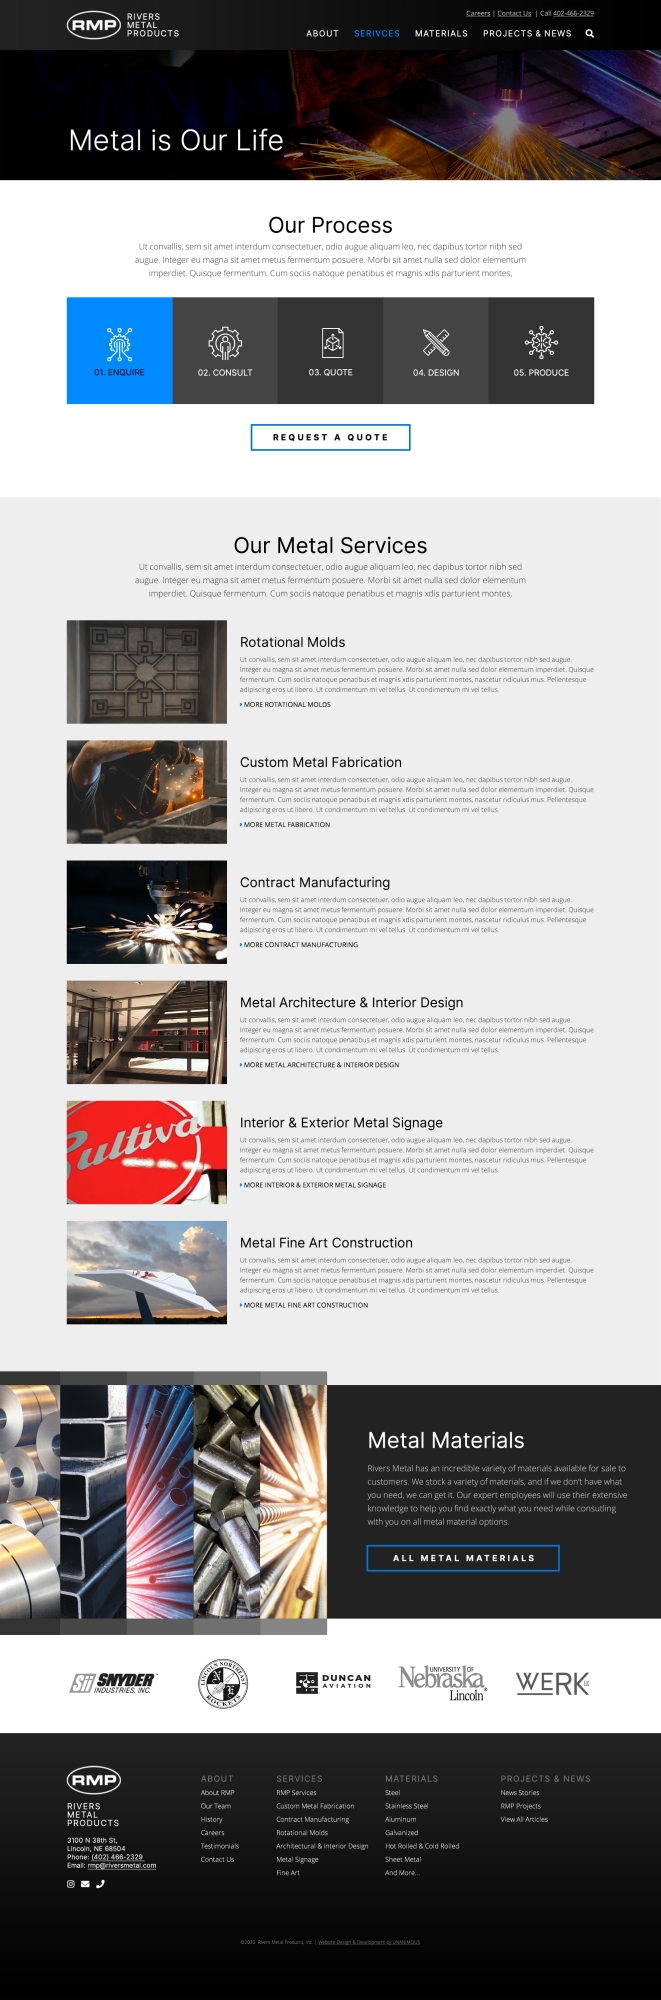 rivers metal website design services